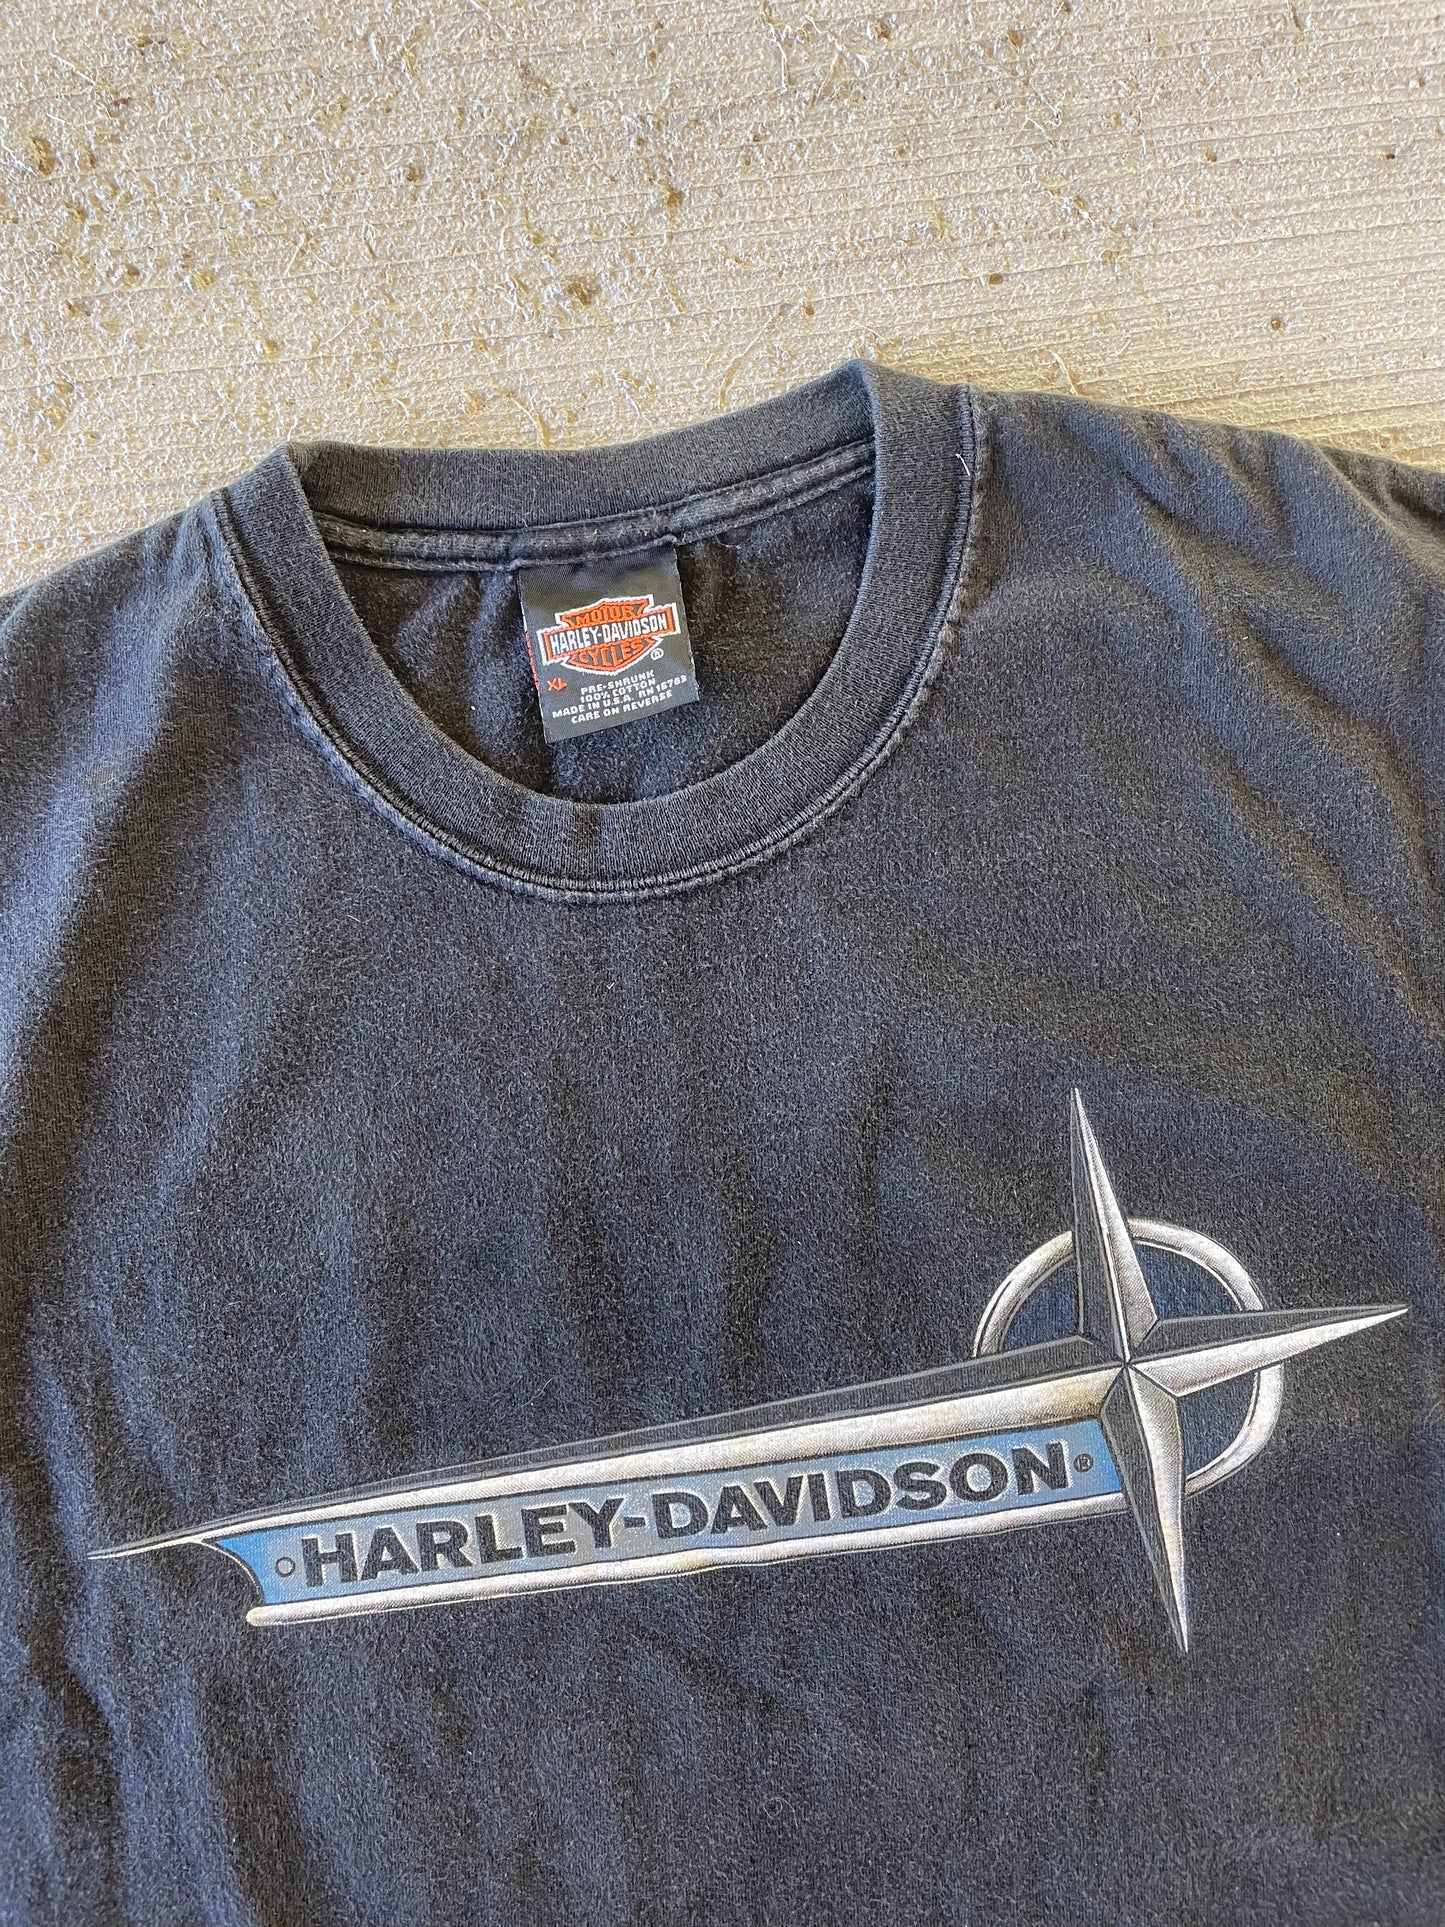 2001 Harley Davidson NYC Tee